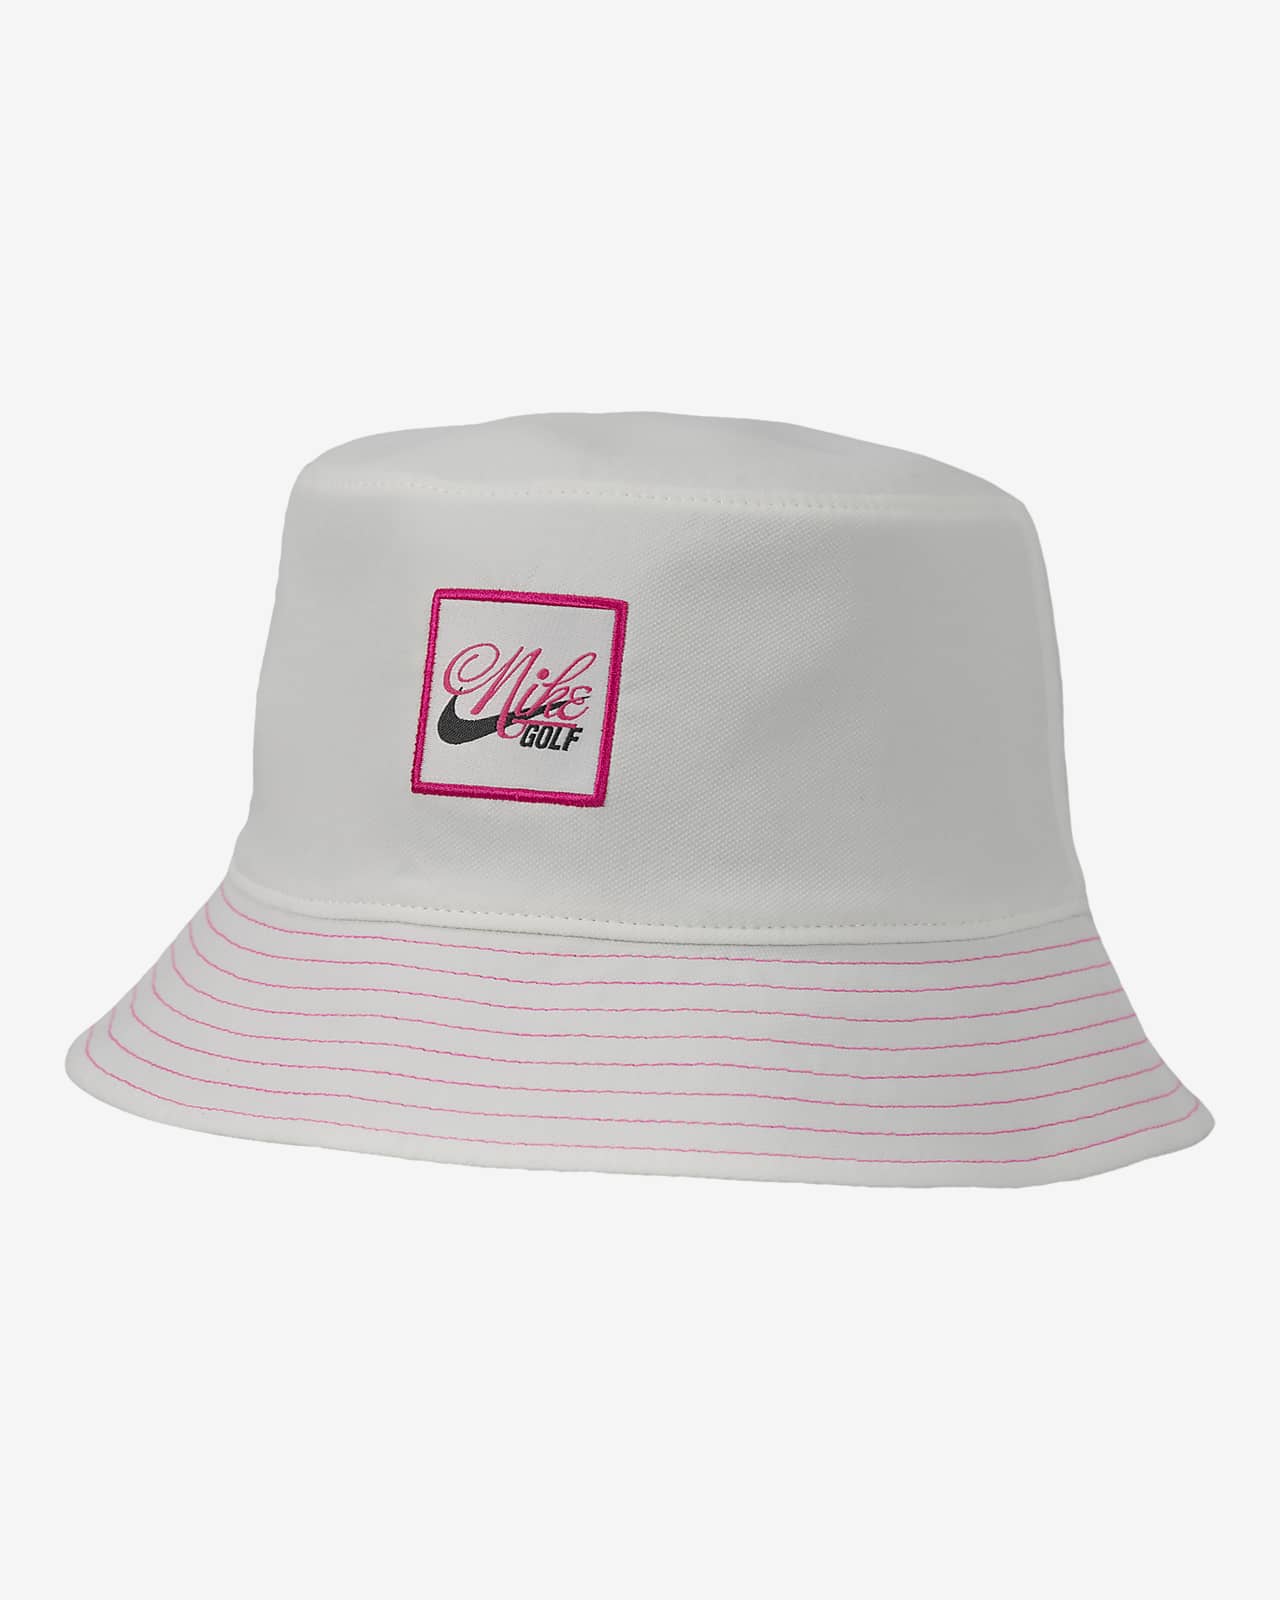 Reversible Nike Bucket Golf Hat.